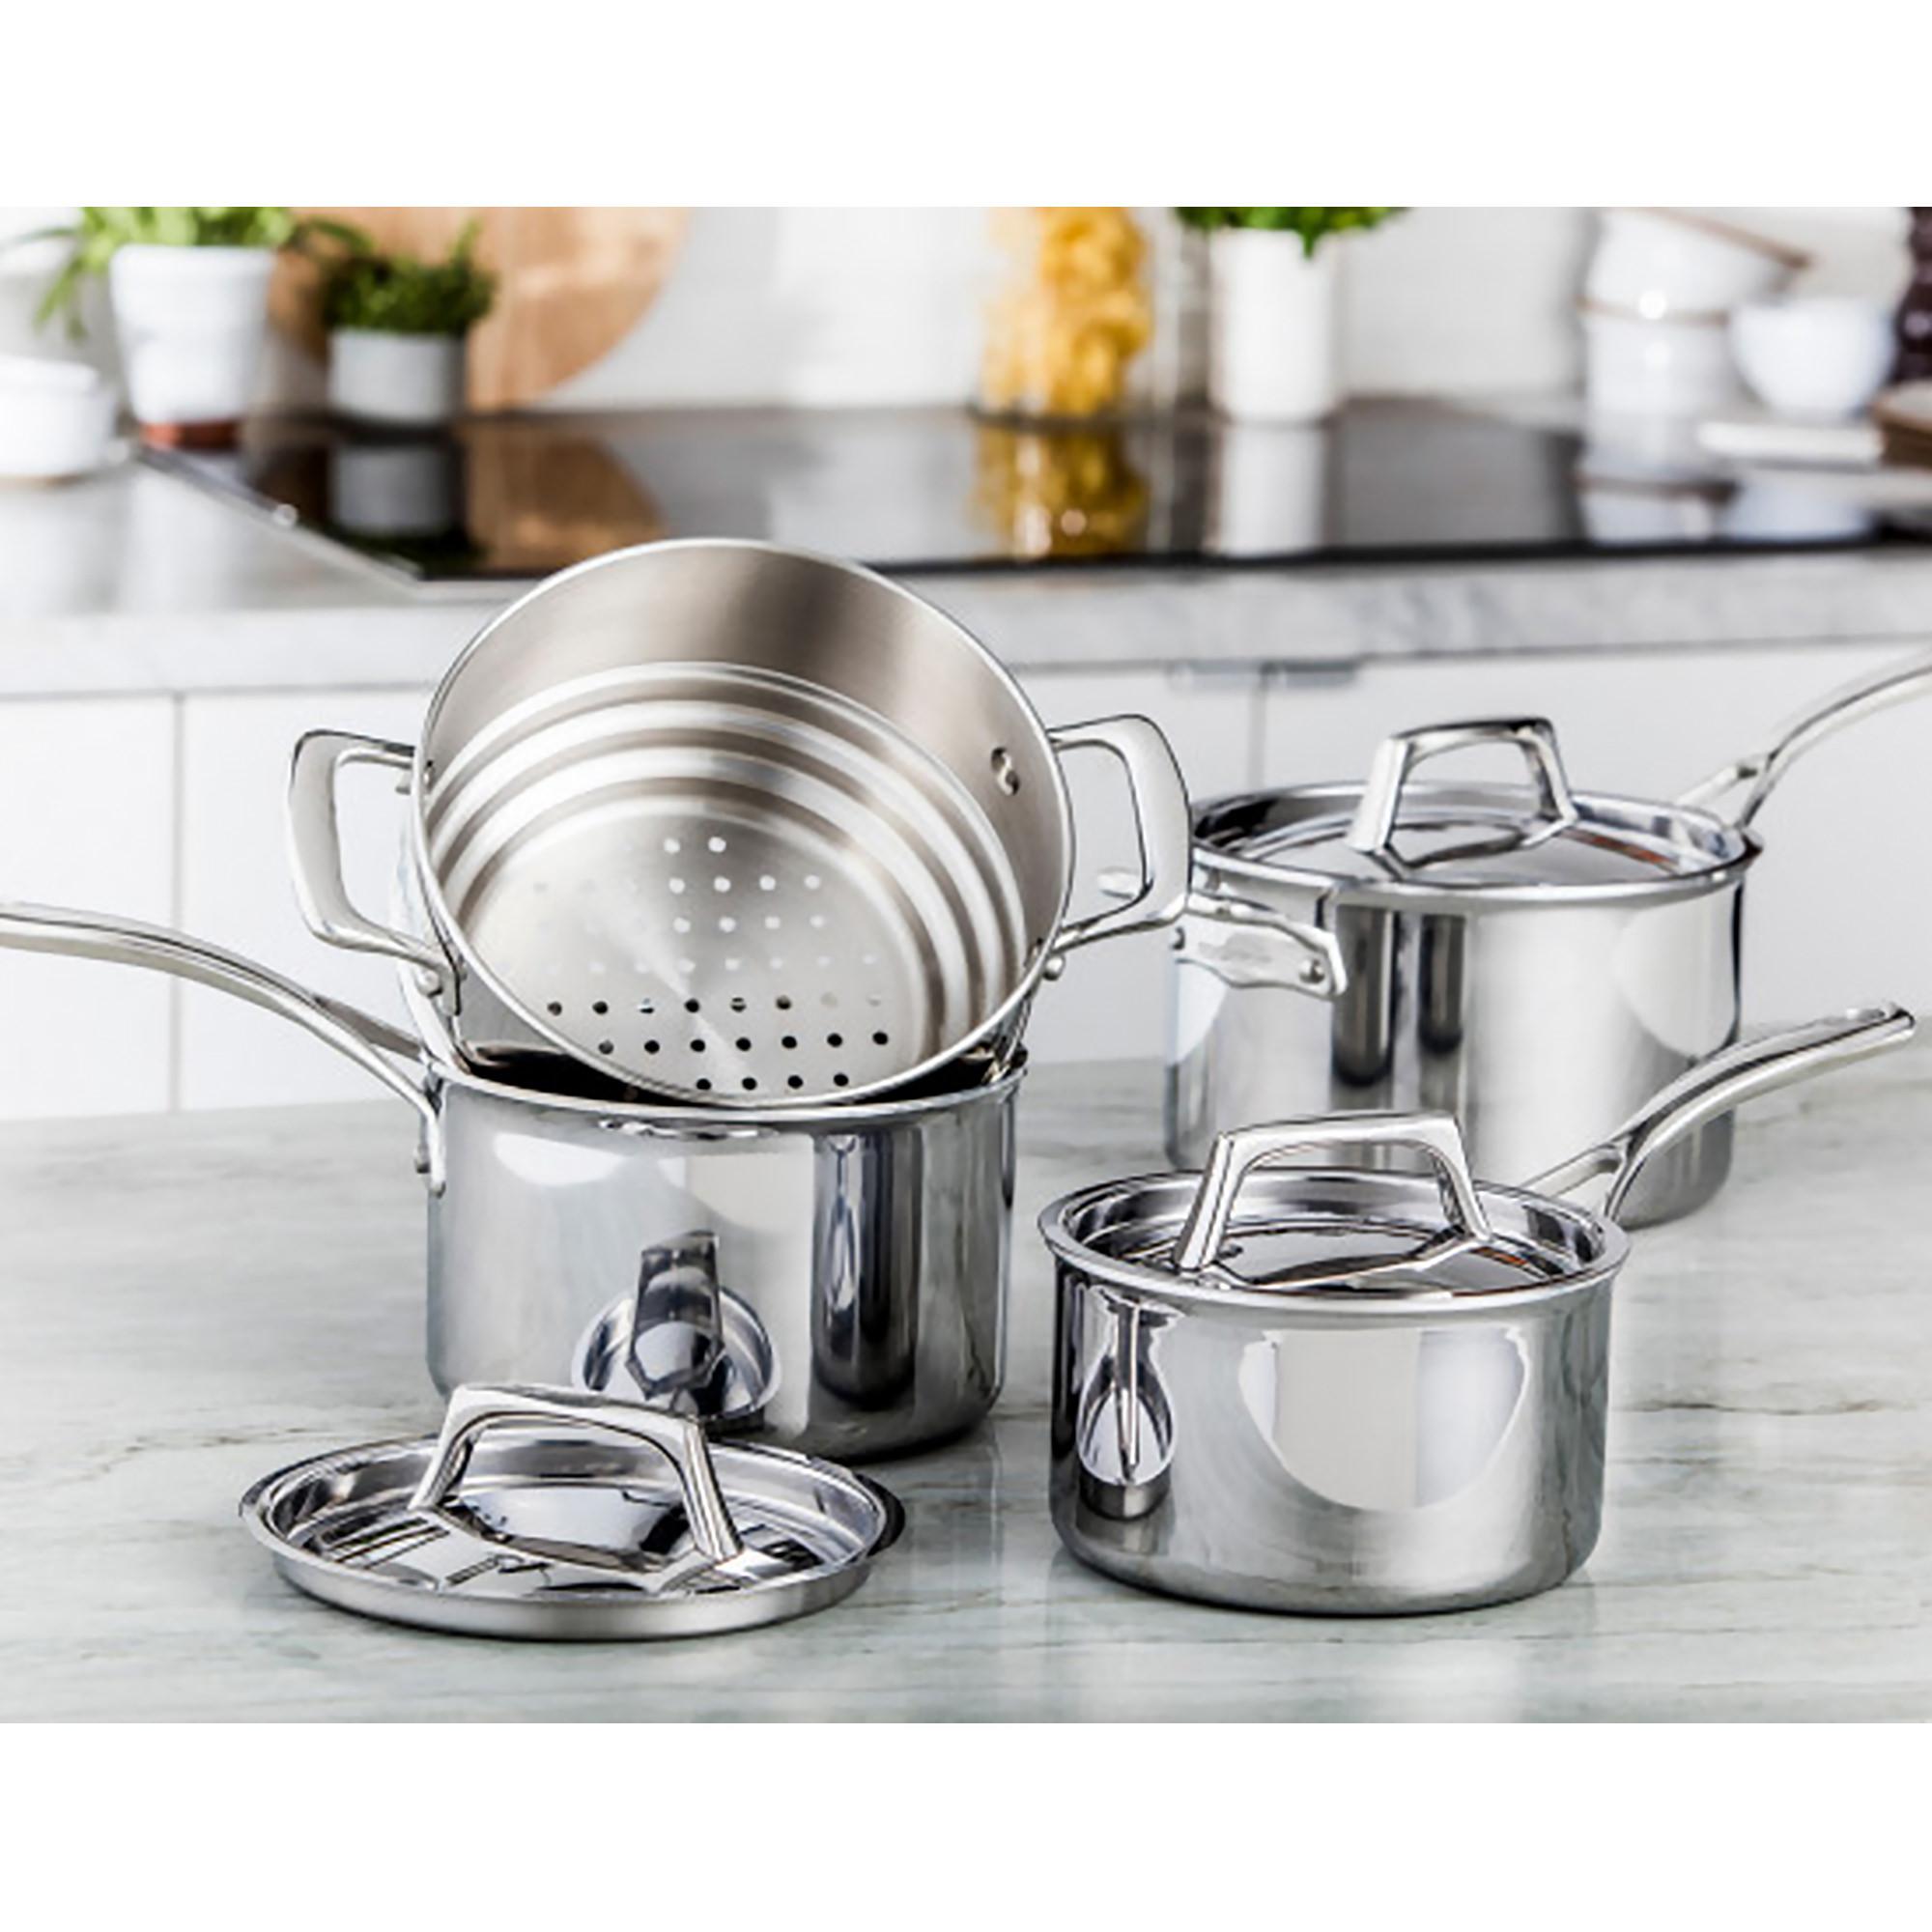 Essteele Per Sempre 4pc Stainless Steel Cookware Set Image 3